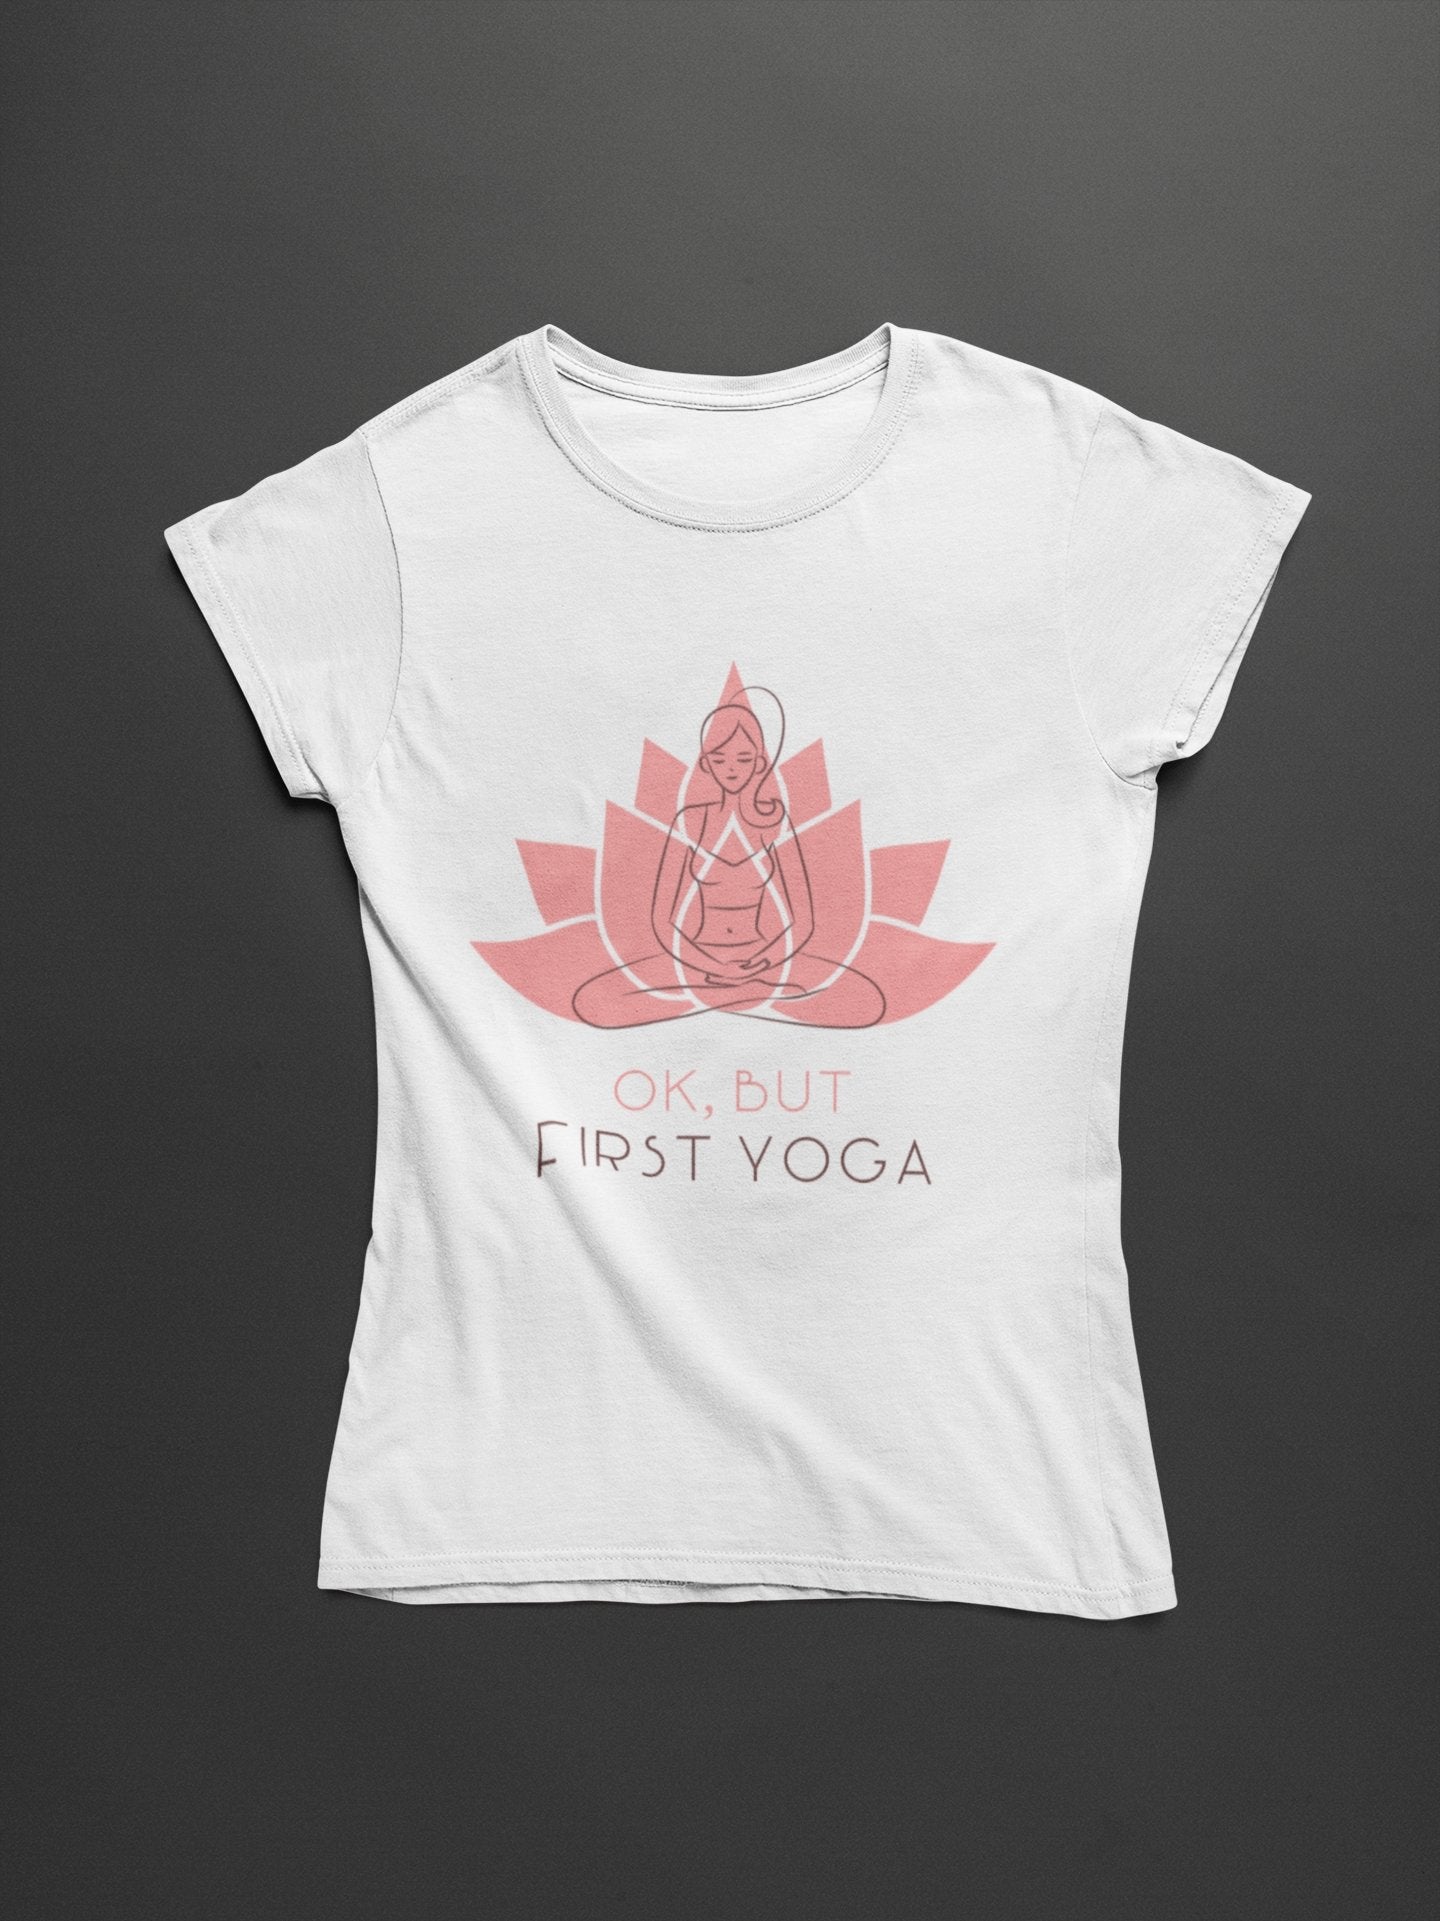 thelegalgang,OK, But First Design Yoga T shirt for Women,WOMEN.